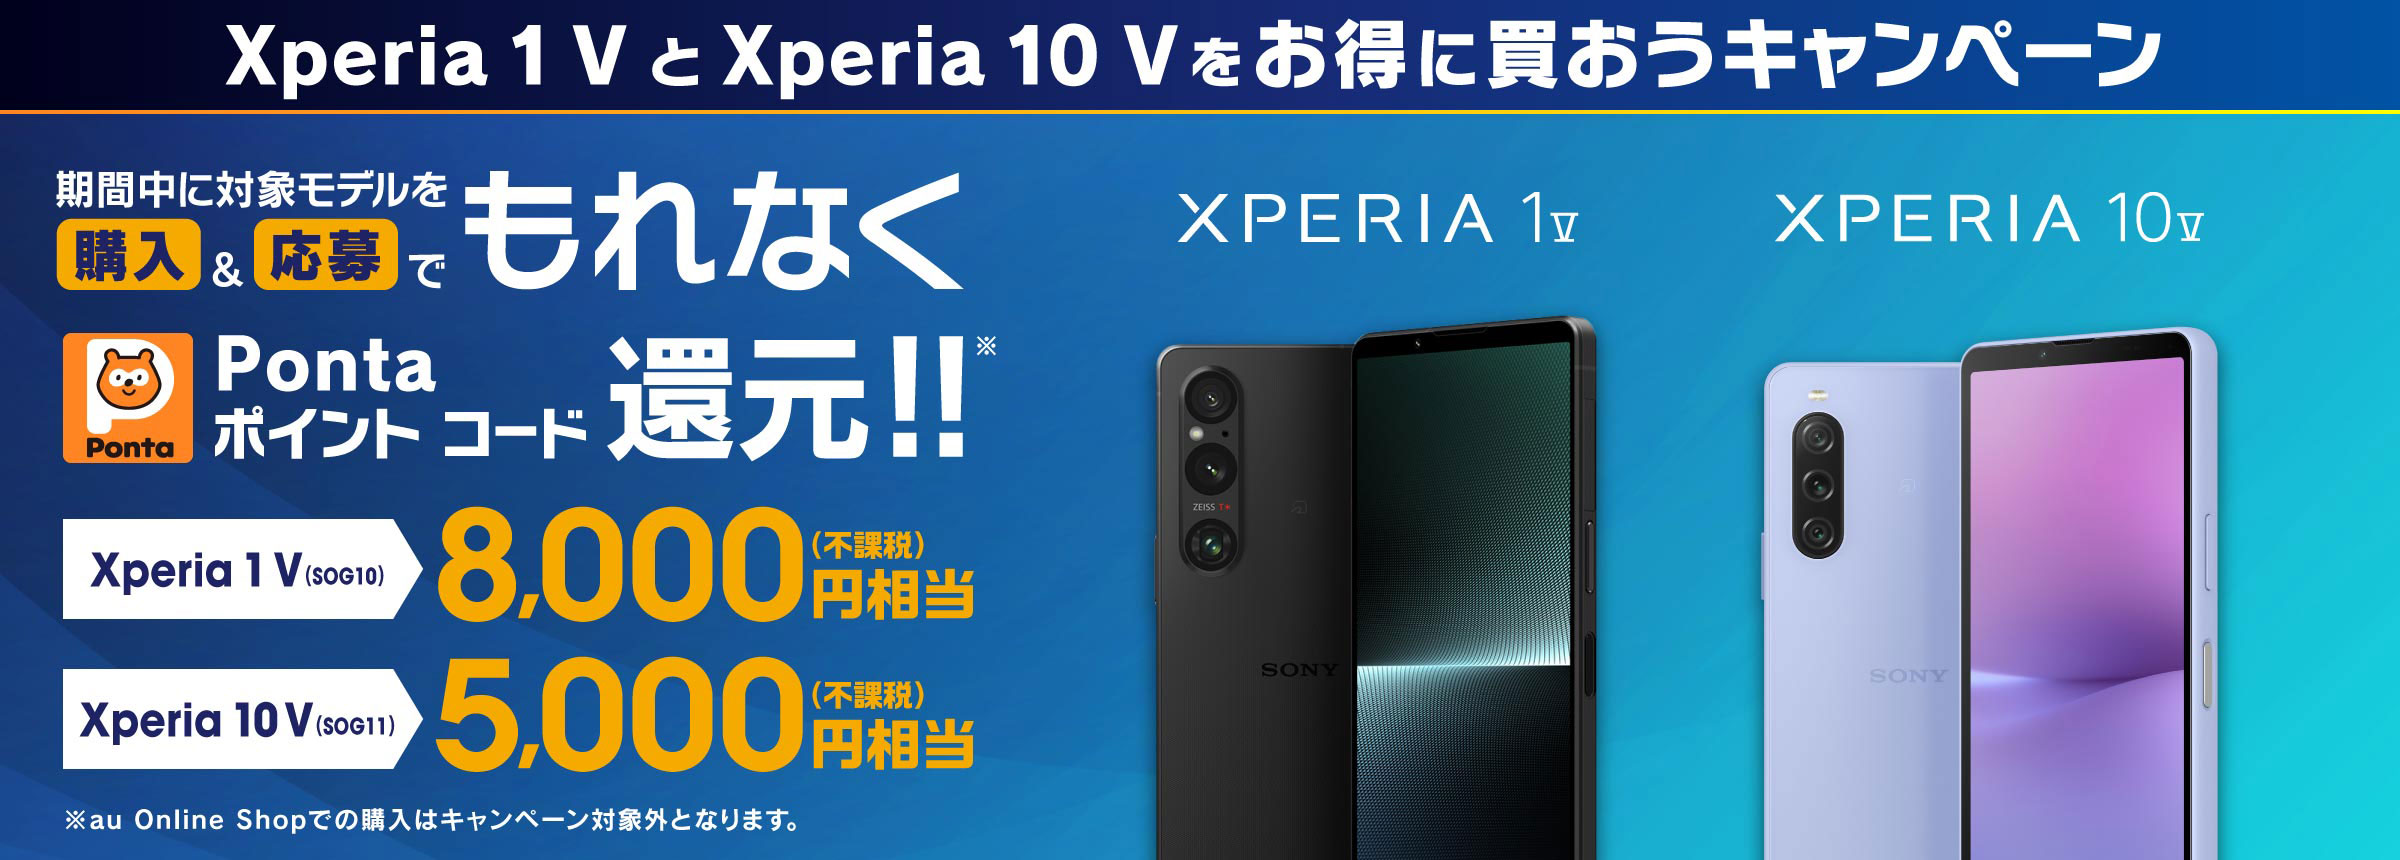 Xperia 1 V と Xperia 10 V をお得に買おうキャンペーン 期間中 購入＆応募でもれなく Pontaポイントコード 還元!! Xperia 1 V (SOG10) 8,000円相当(不課税) Xperia 10 V (SOG11) 5,000円相当(不課税) ※au Online Shopでの購入はキャンペーン対象外となります。